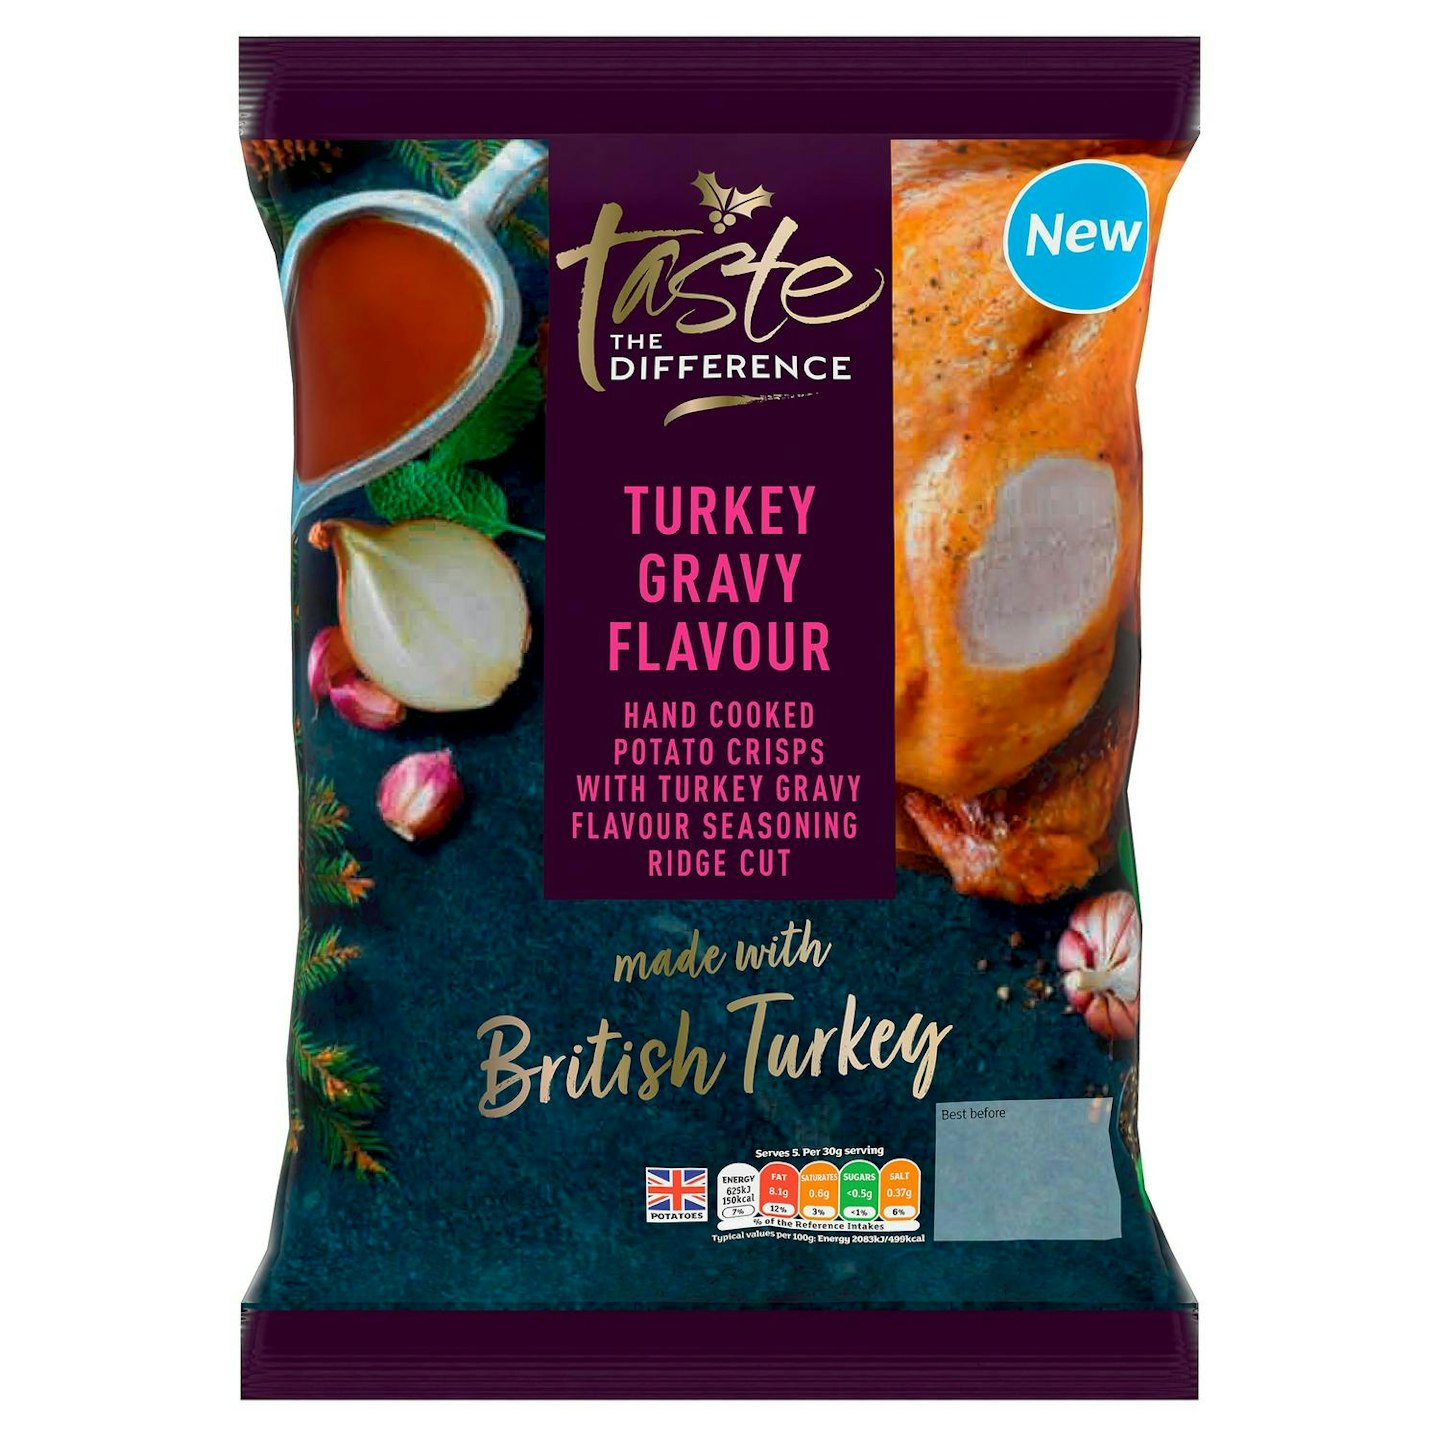 Sainsbury's Turkey Gravy Flavour, Taste the Difference, £1.25